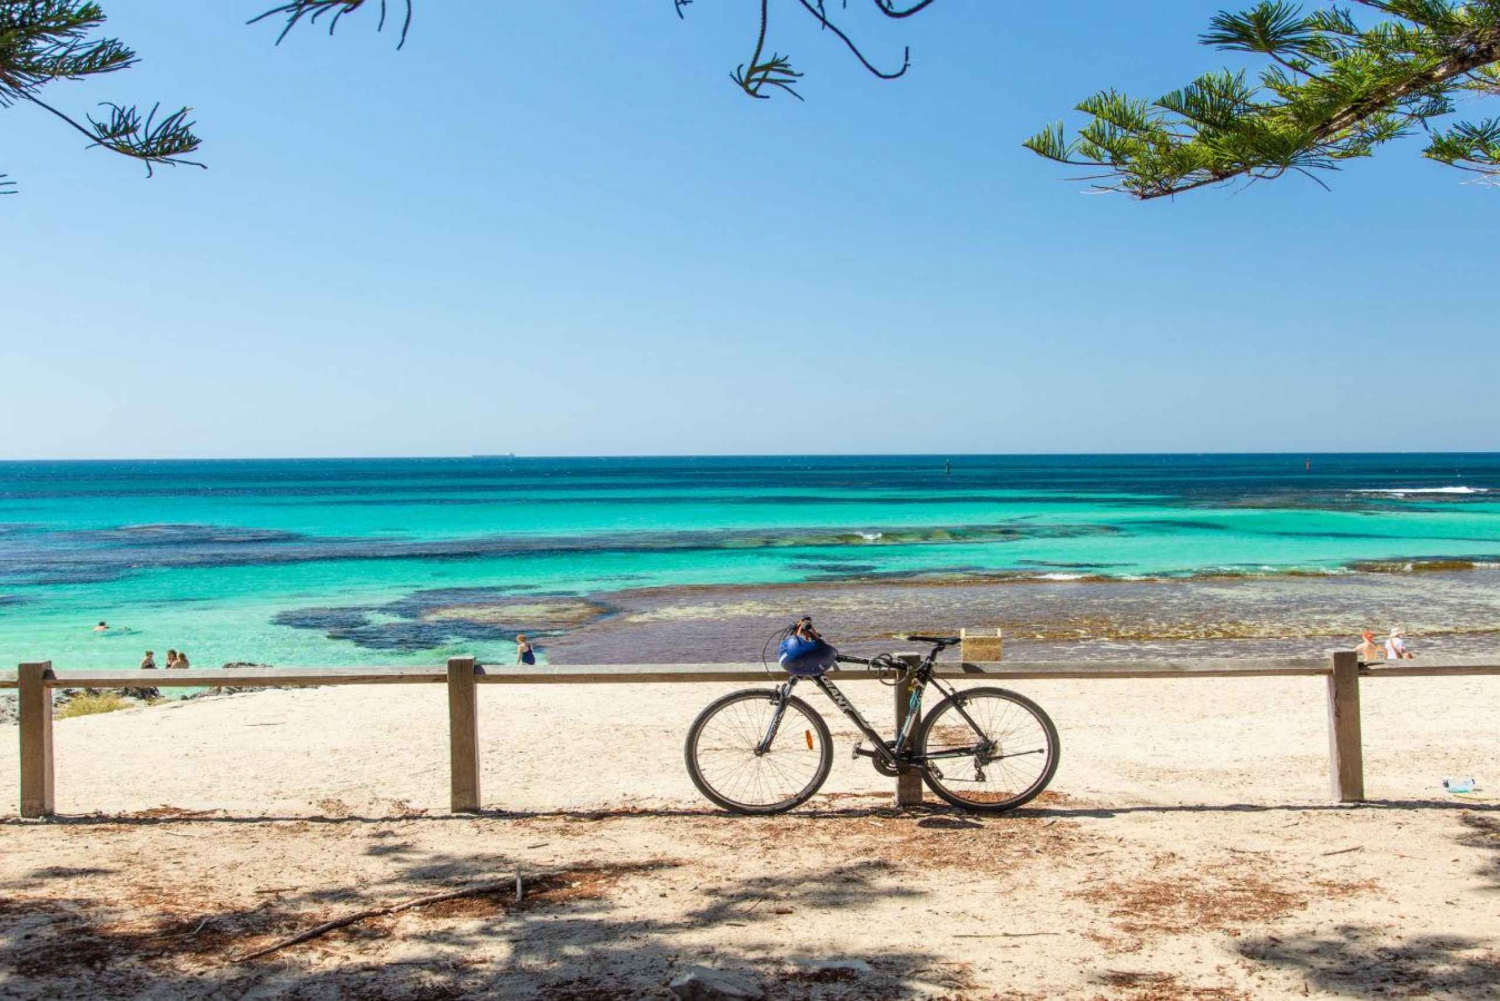 Perth: Snorkel Gear & Bike Rental with Rottnest Island Ferry